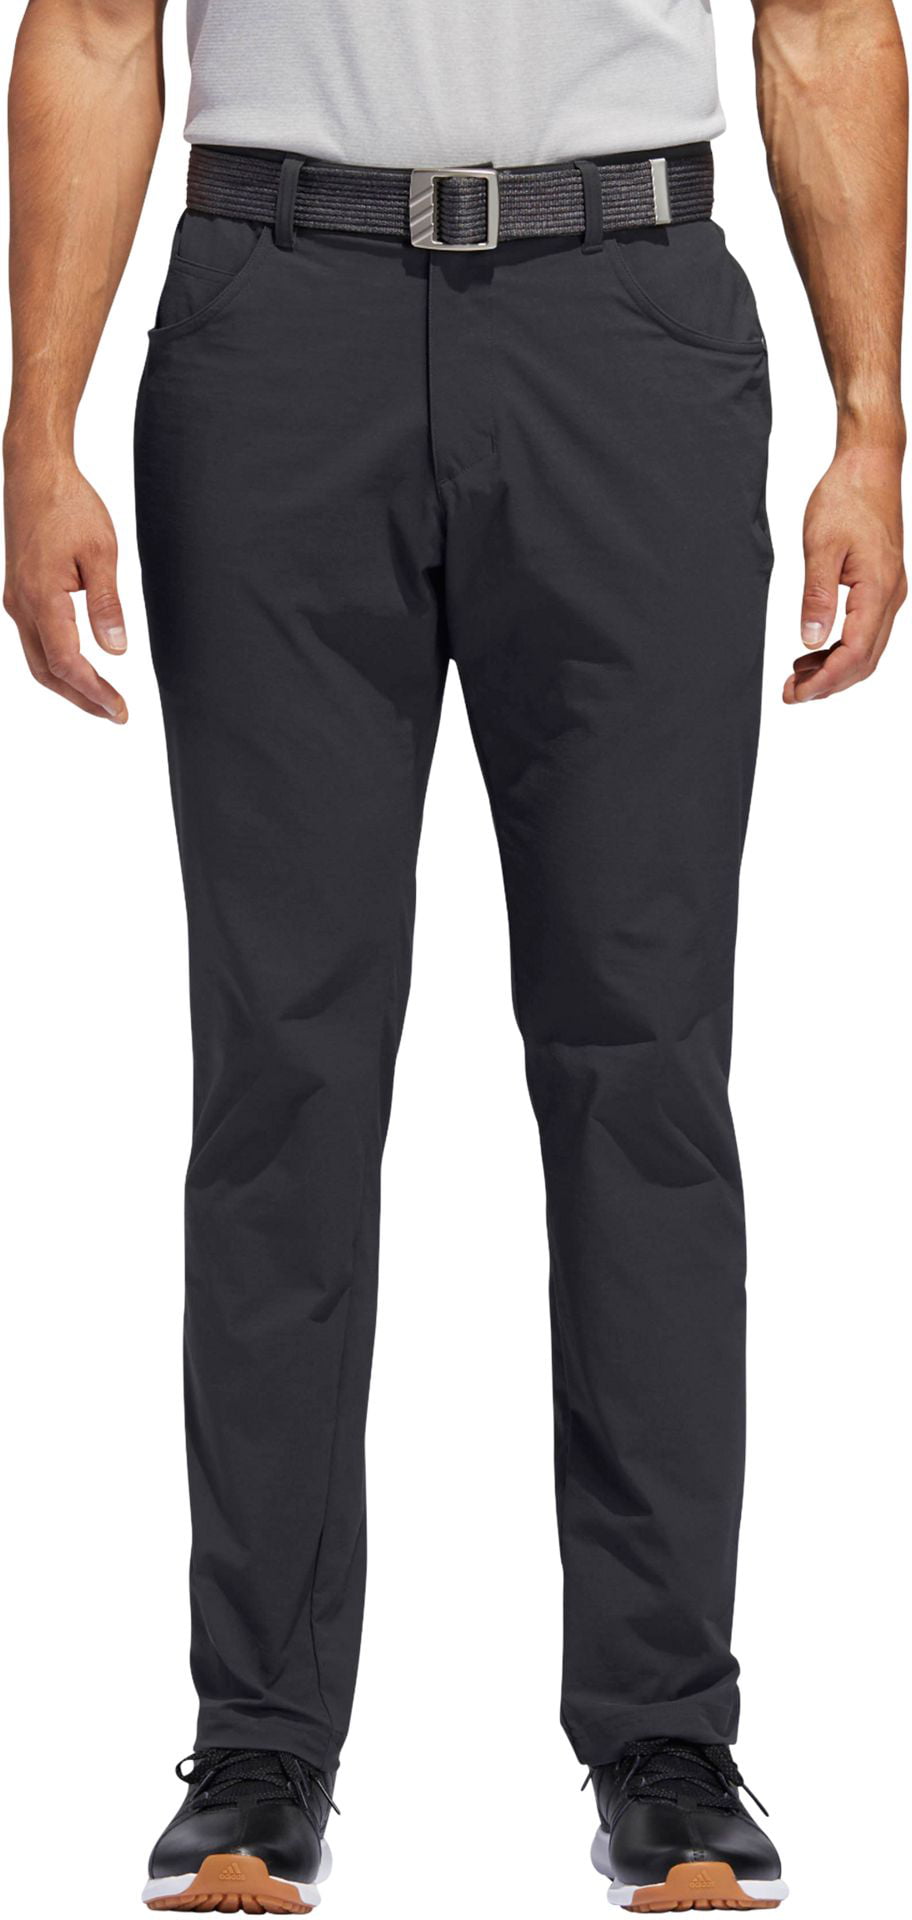 adidas men's adicross slim 5 pocket golf pants - Walmart.com - Walmart.com